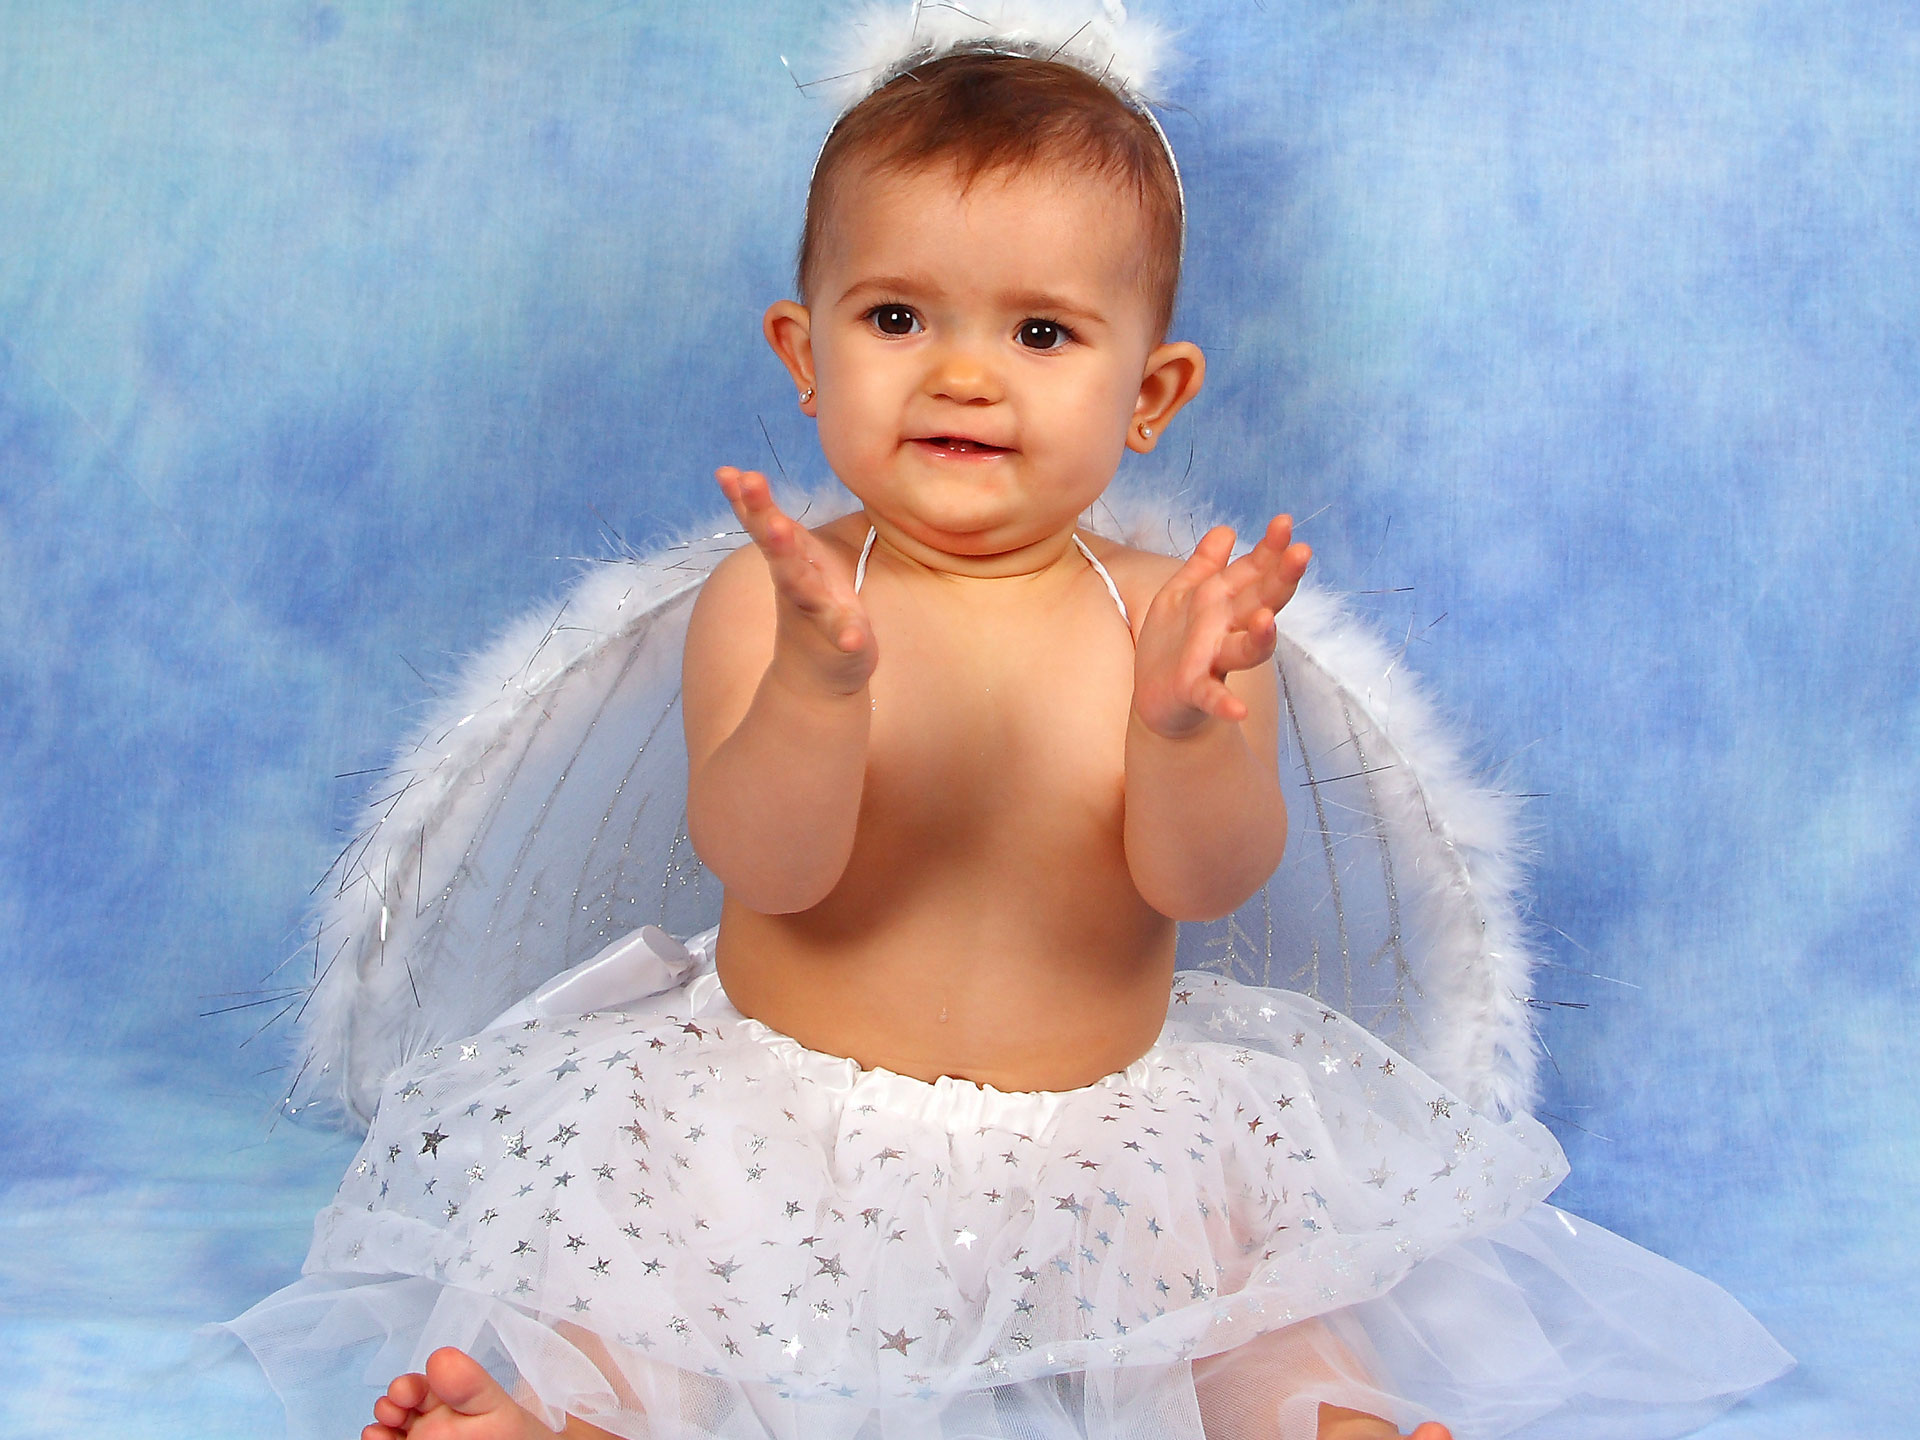 Cute Angel Baby Girl180448221 - Cute Angel Baby Girl - Hidden, Girl, Cute, Baby, Angel